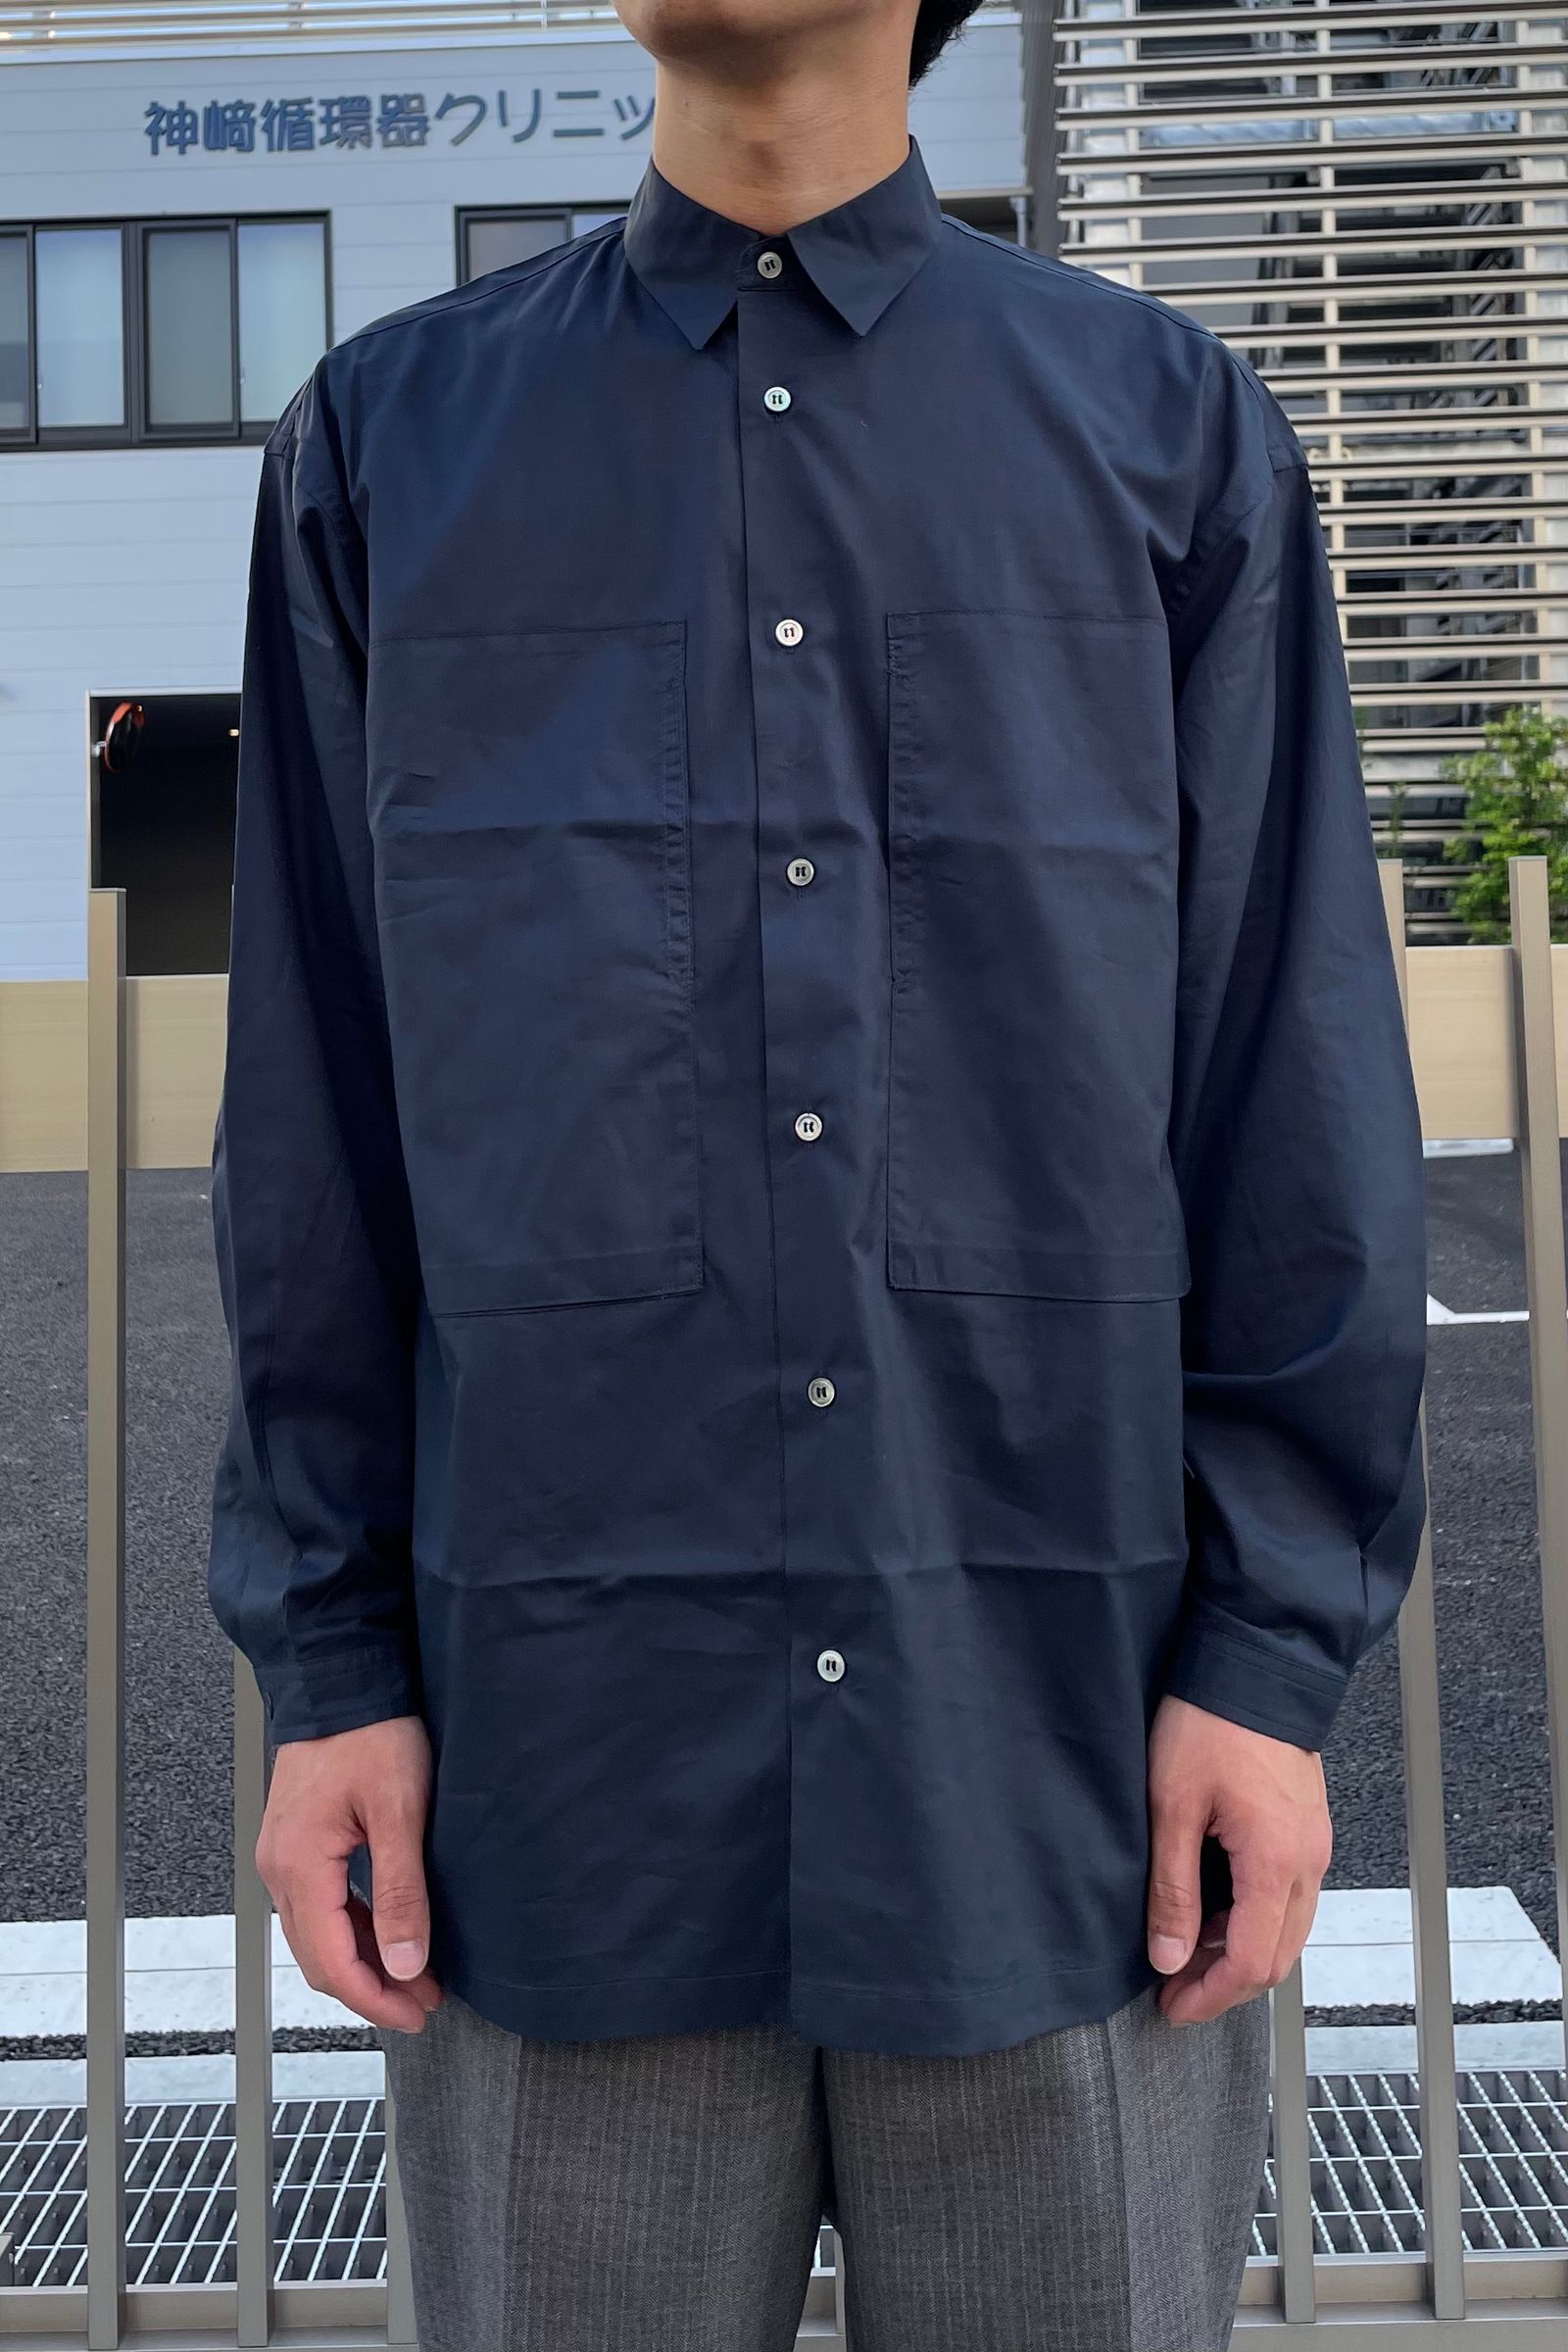 E.TAUTZ - core lineman shirts navy 21aw | asterisk